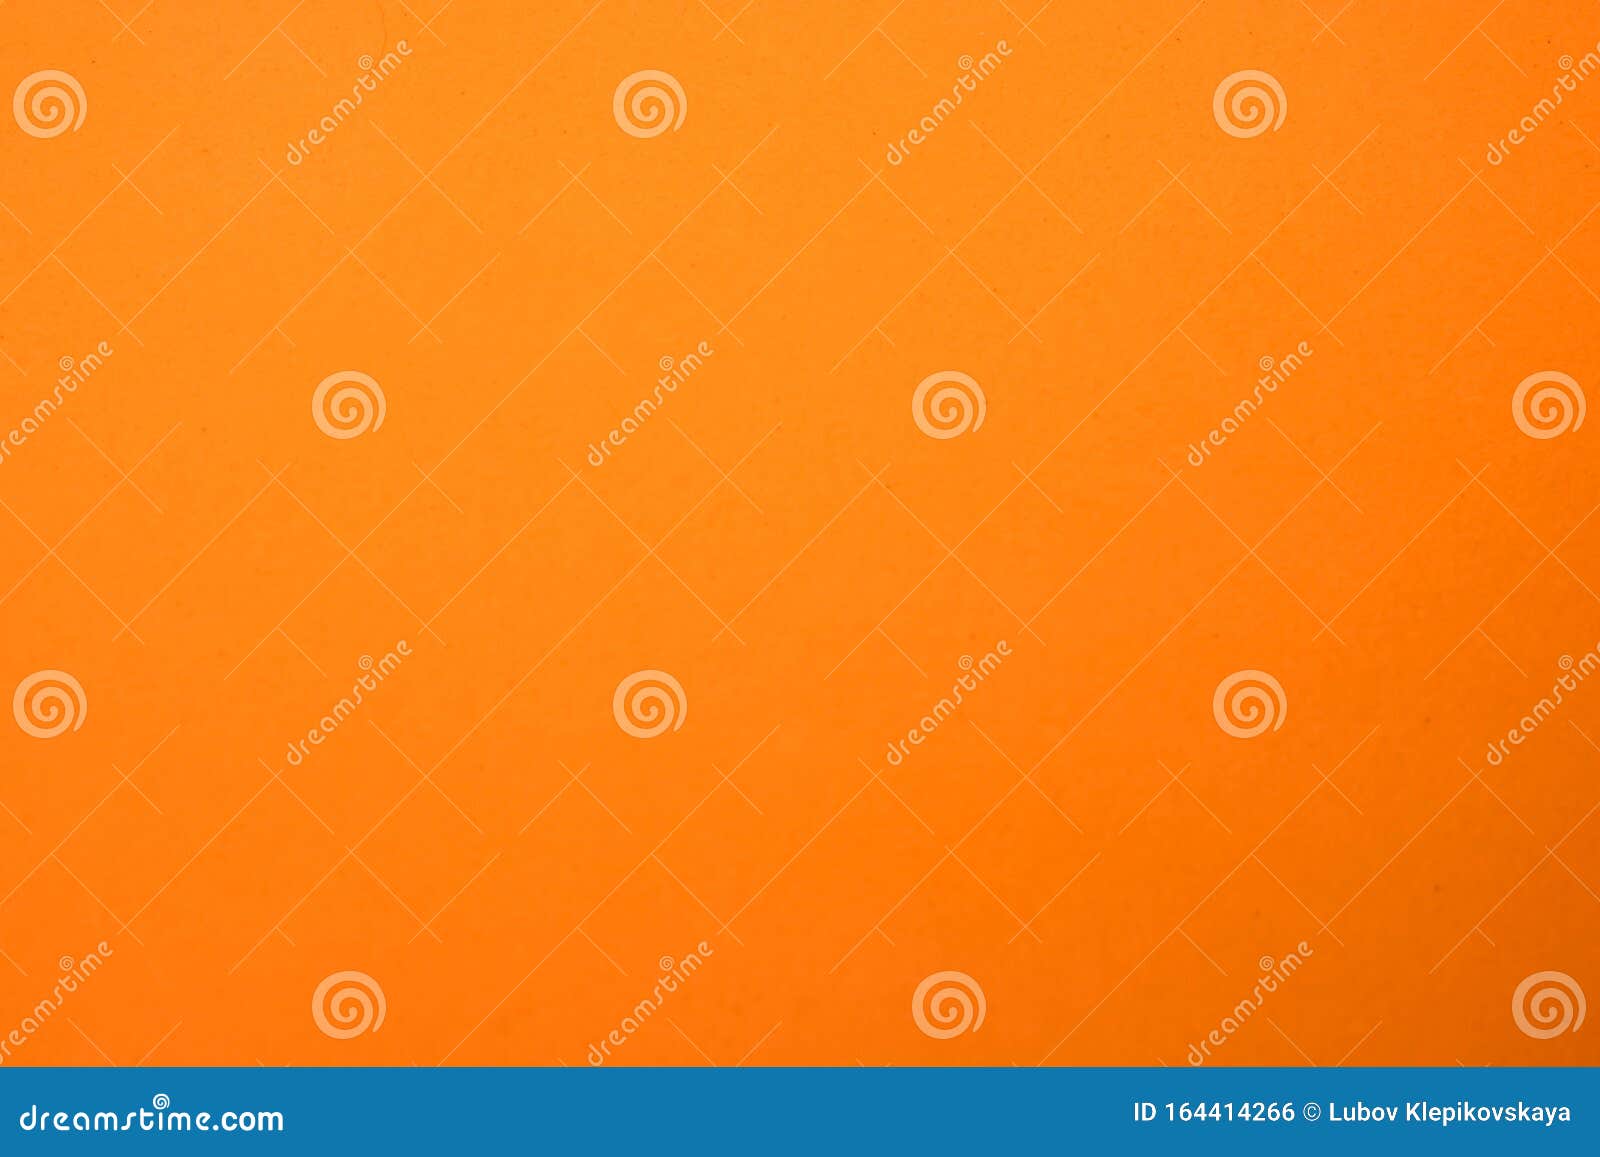 light orange matte background of suede fabric, closeup. velvet texture of seamless ginger woolen felt